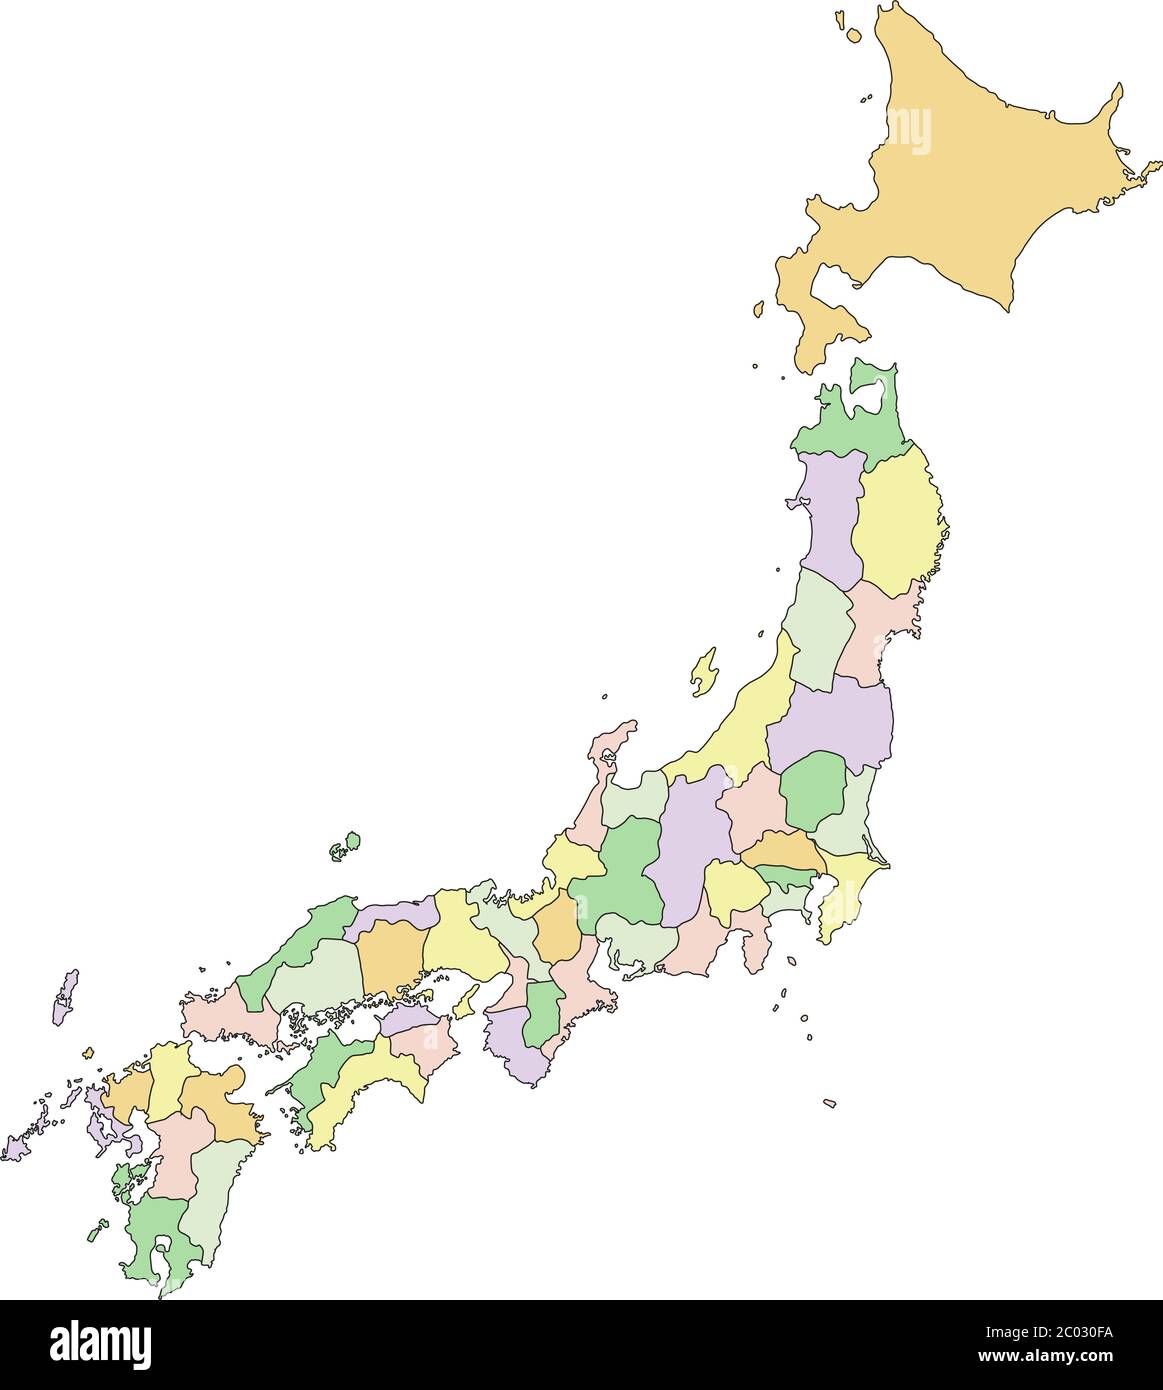 Japan - Highly detailed editable political map. Stock Vector